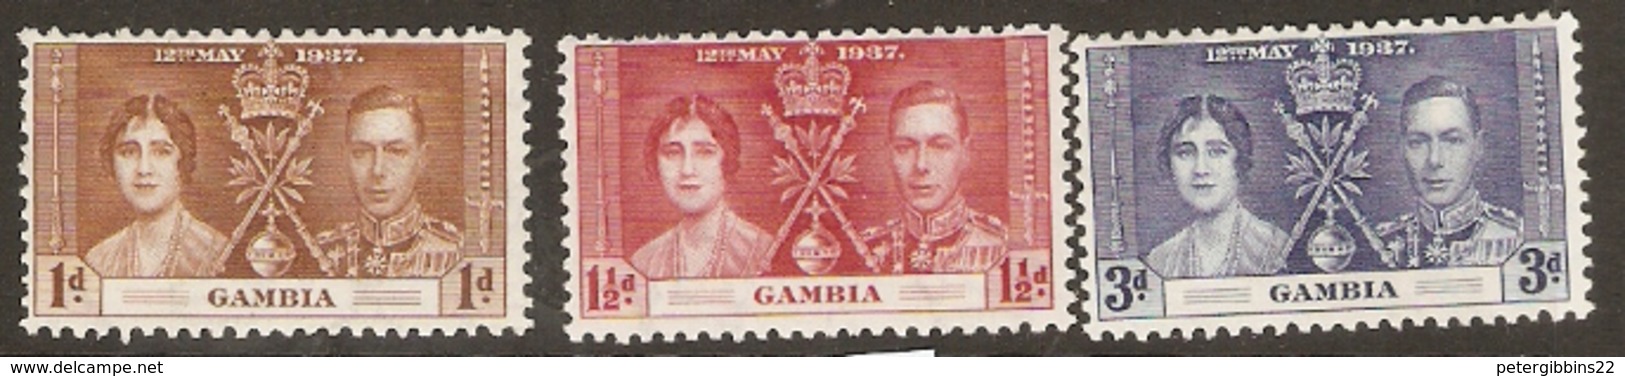 Gambia  1937  SG  147-9  Coronation  Mounted Mint - Gambia (...-1964)